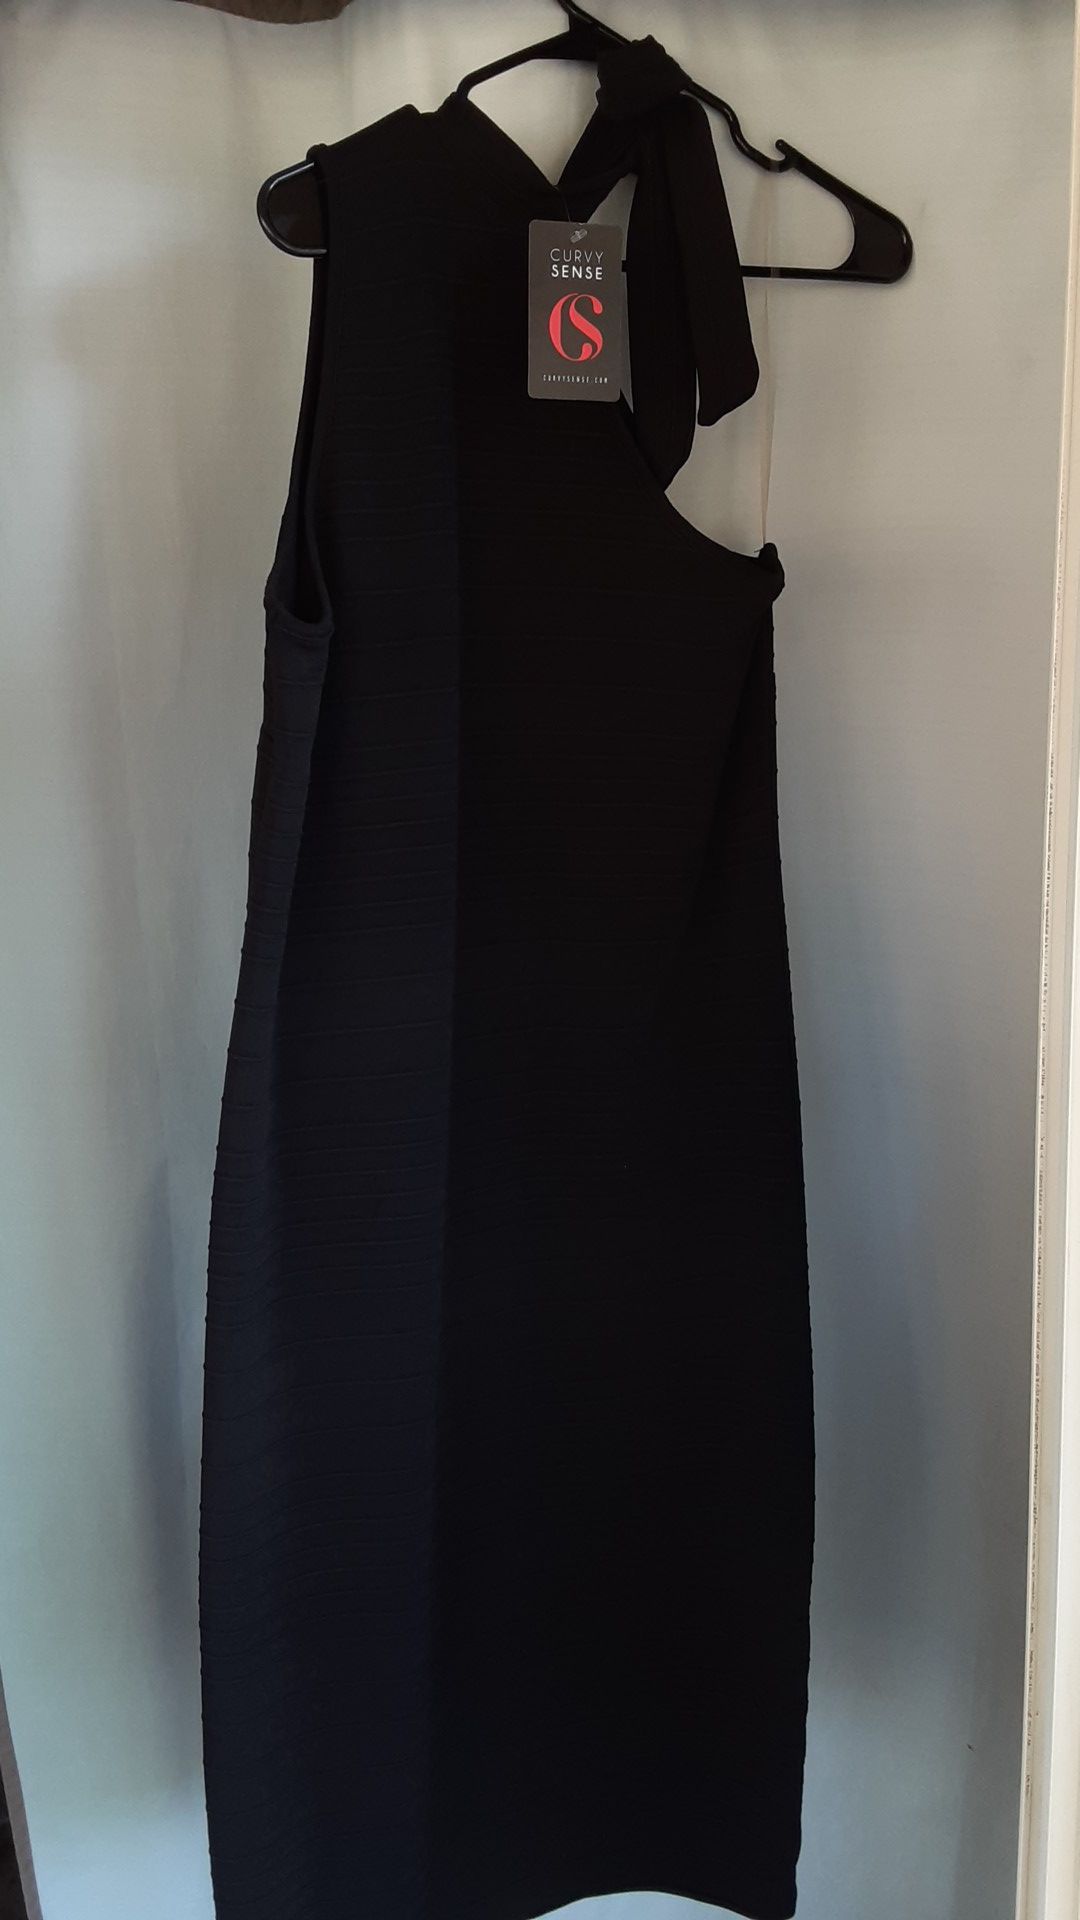 Black dress size 2x